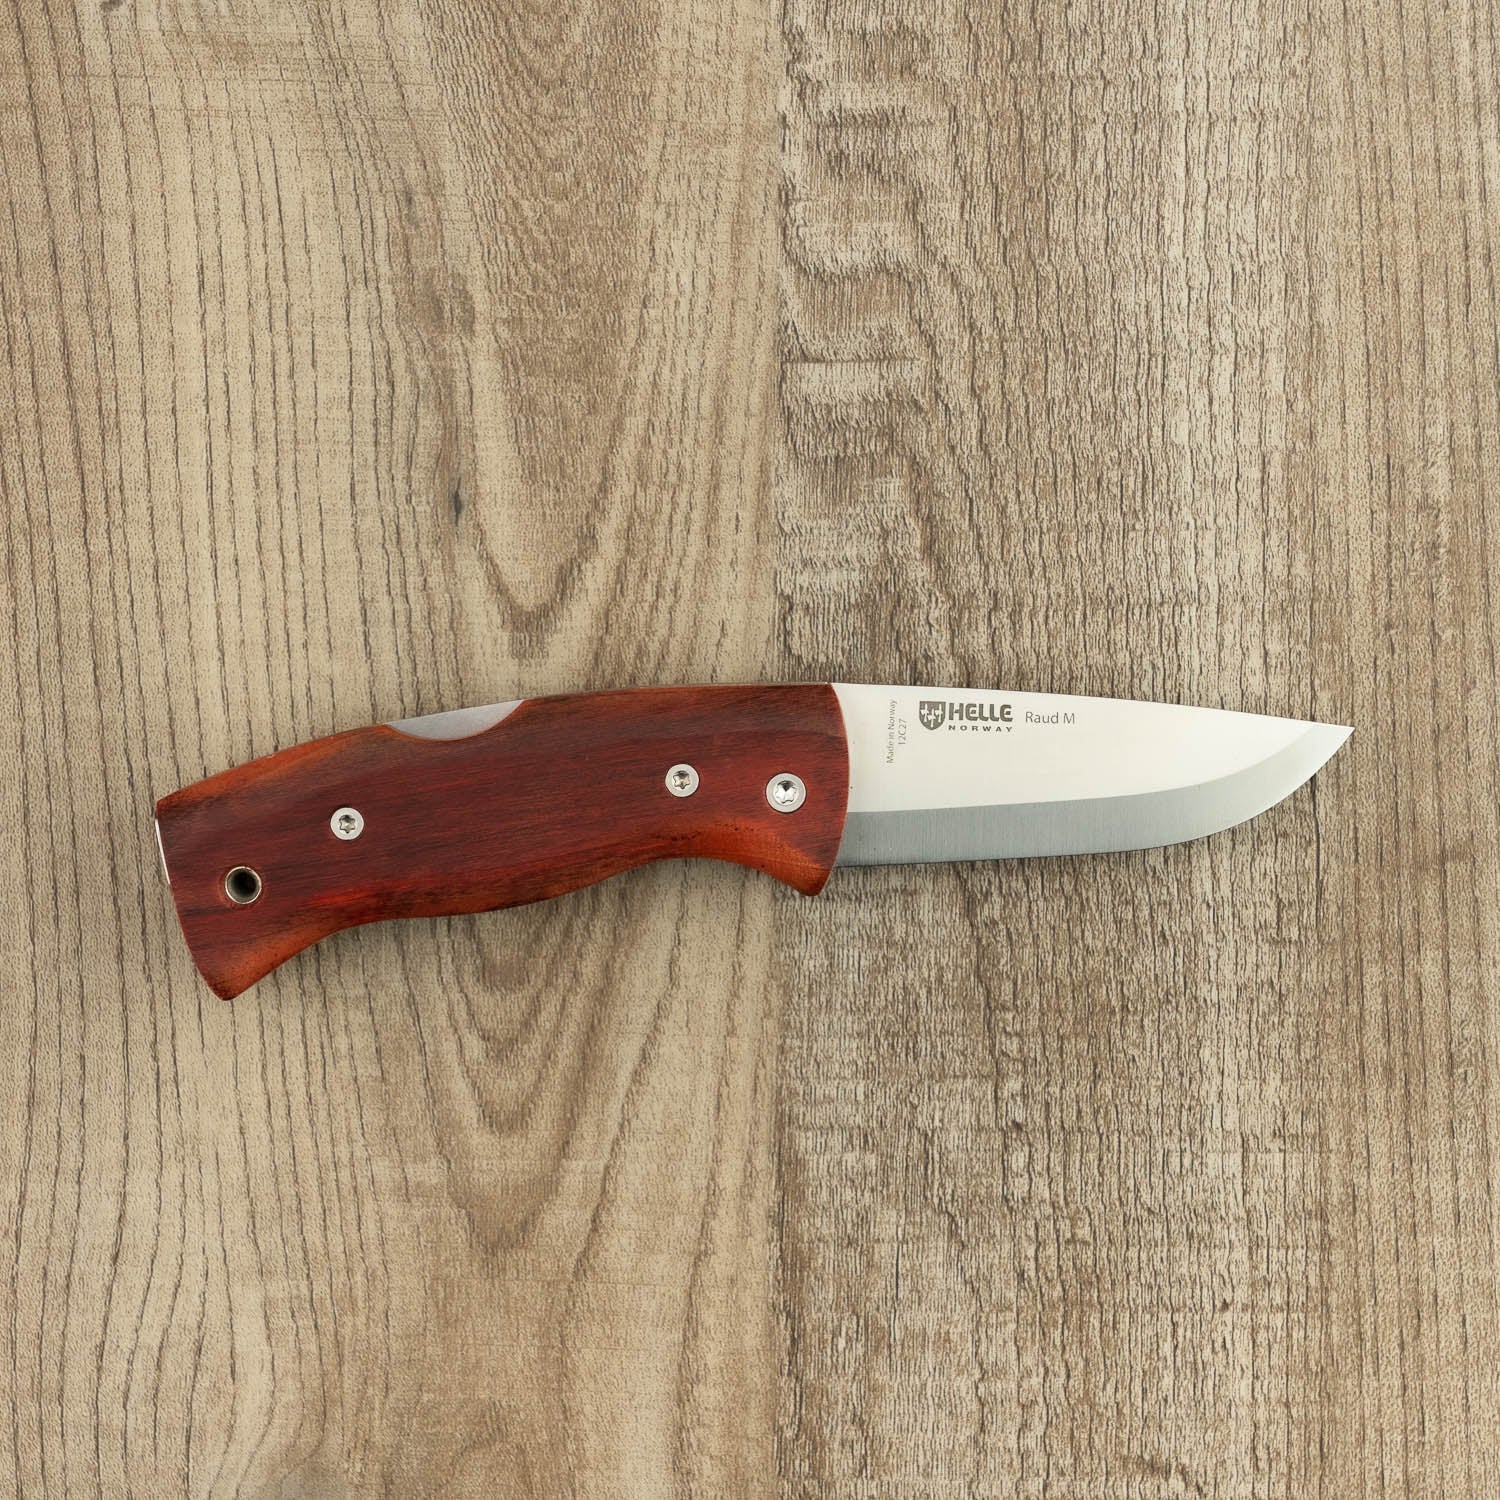 Helle Knives Raud M 69cm Folding Knife